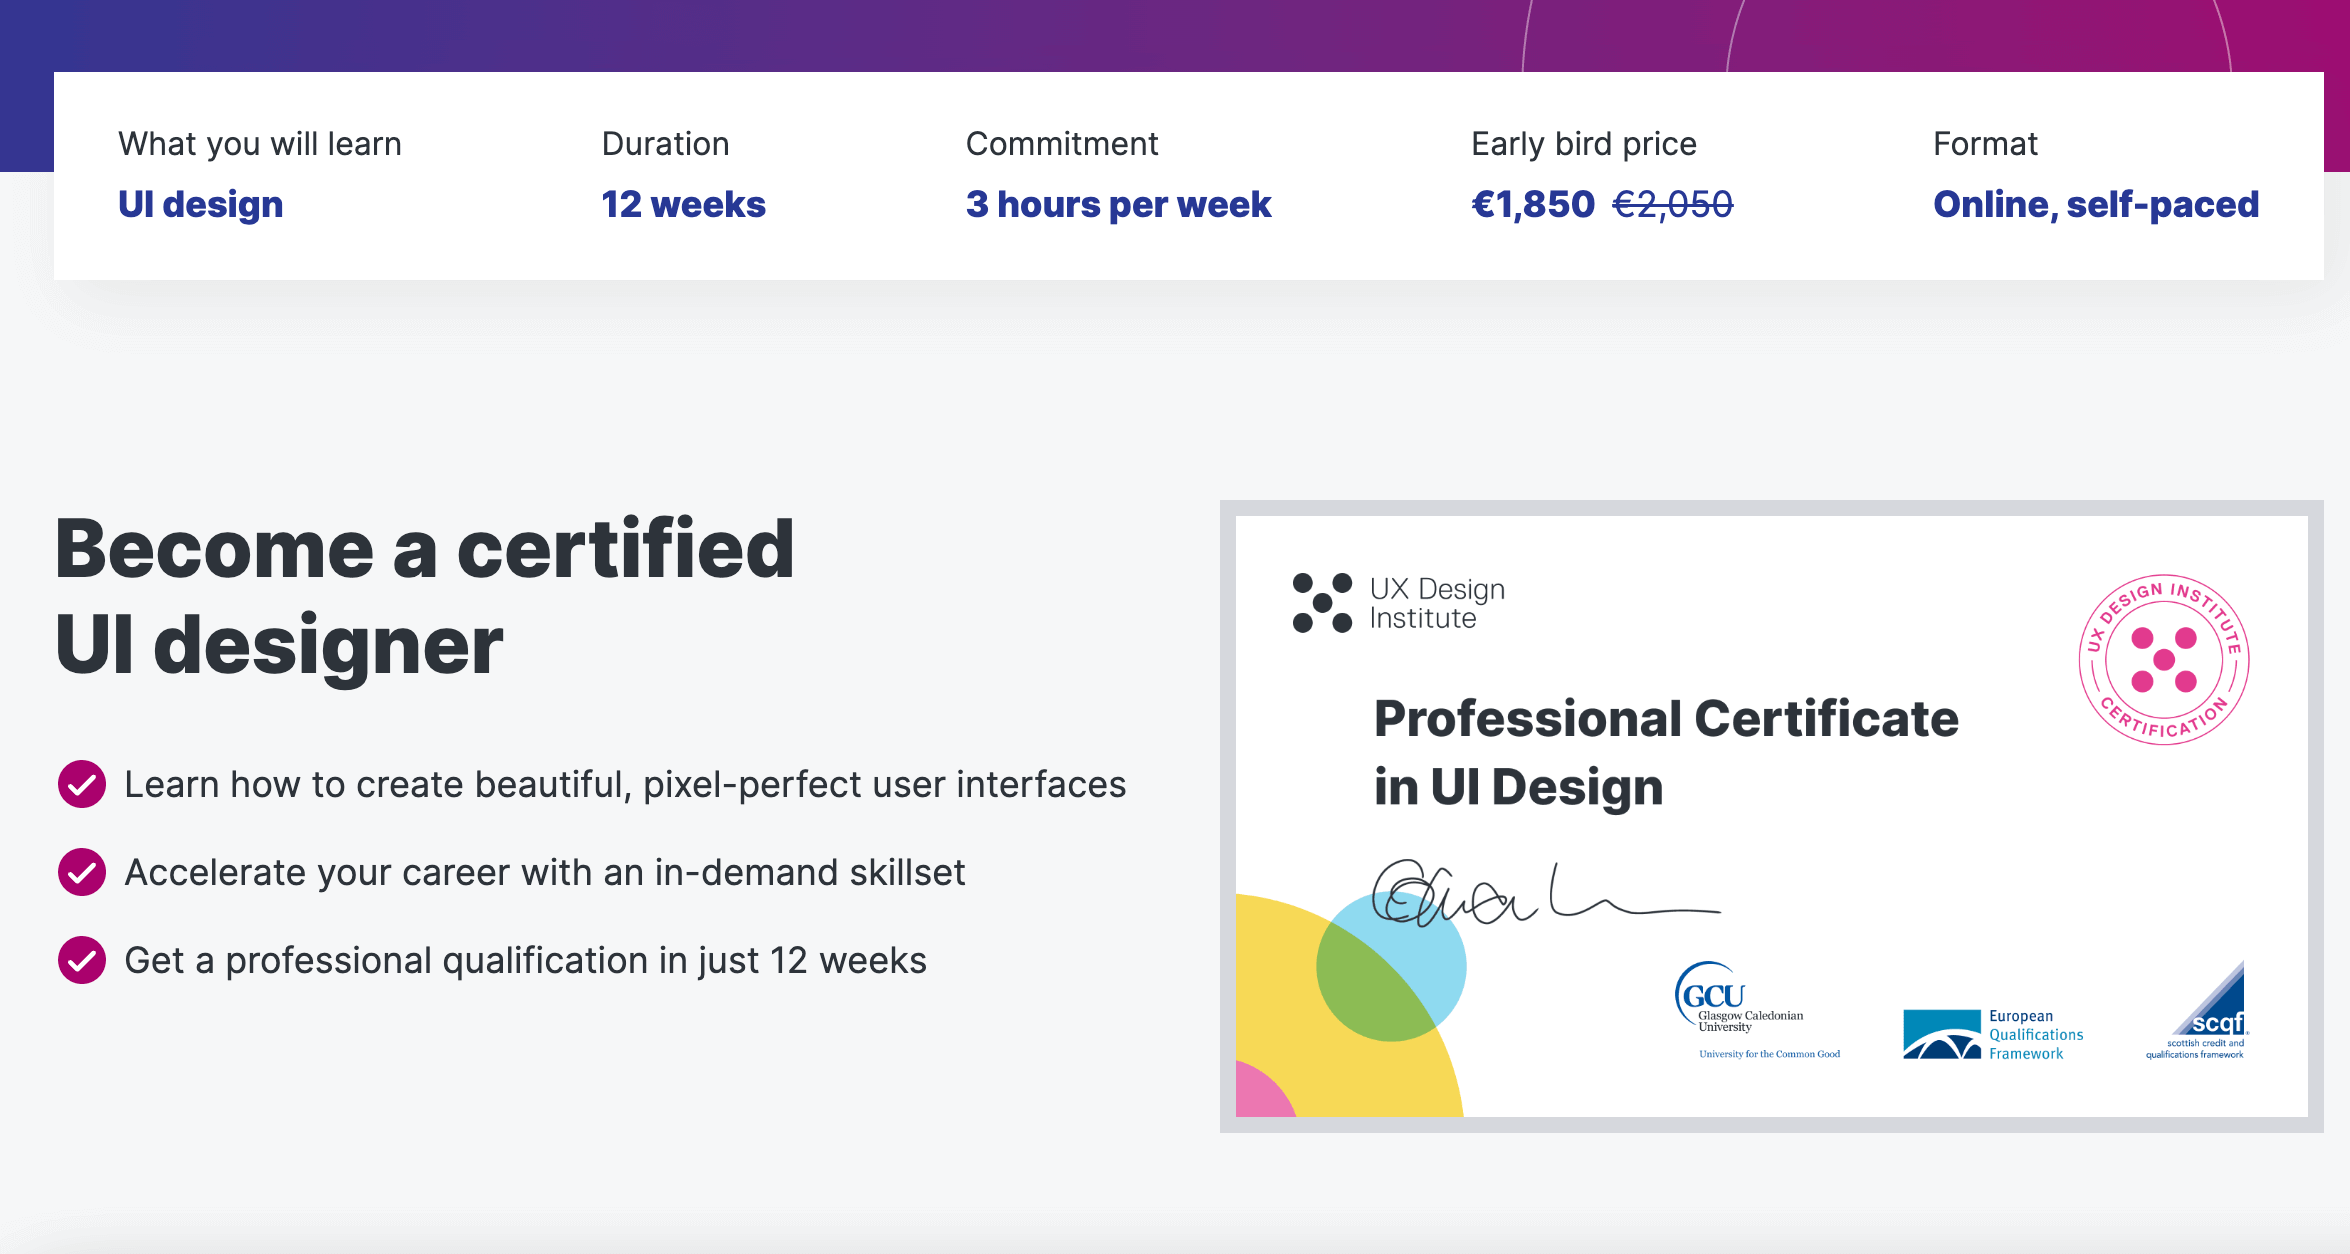 The UX Design Institute Professional Certificate in UI Design